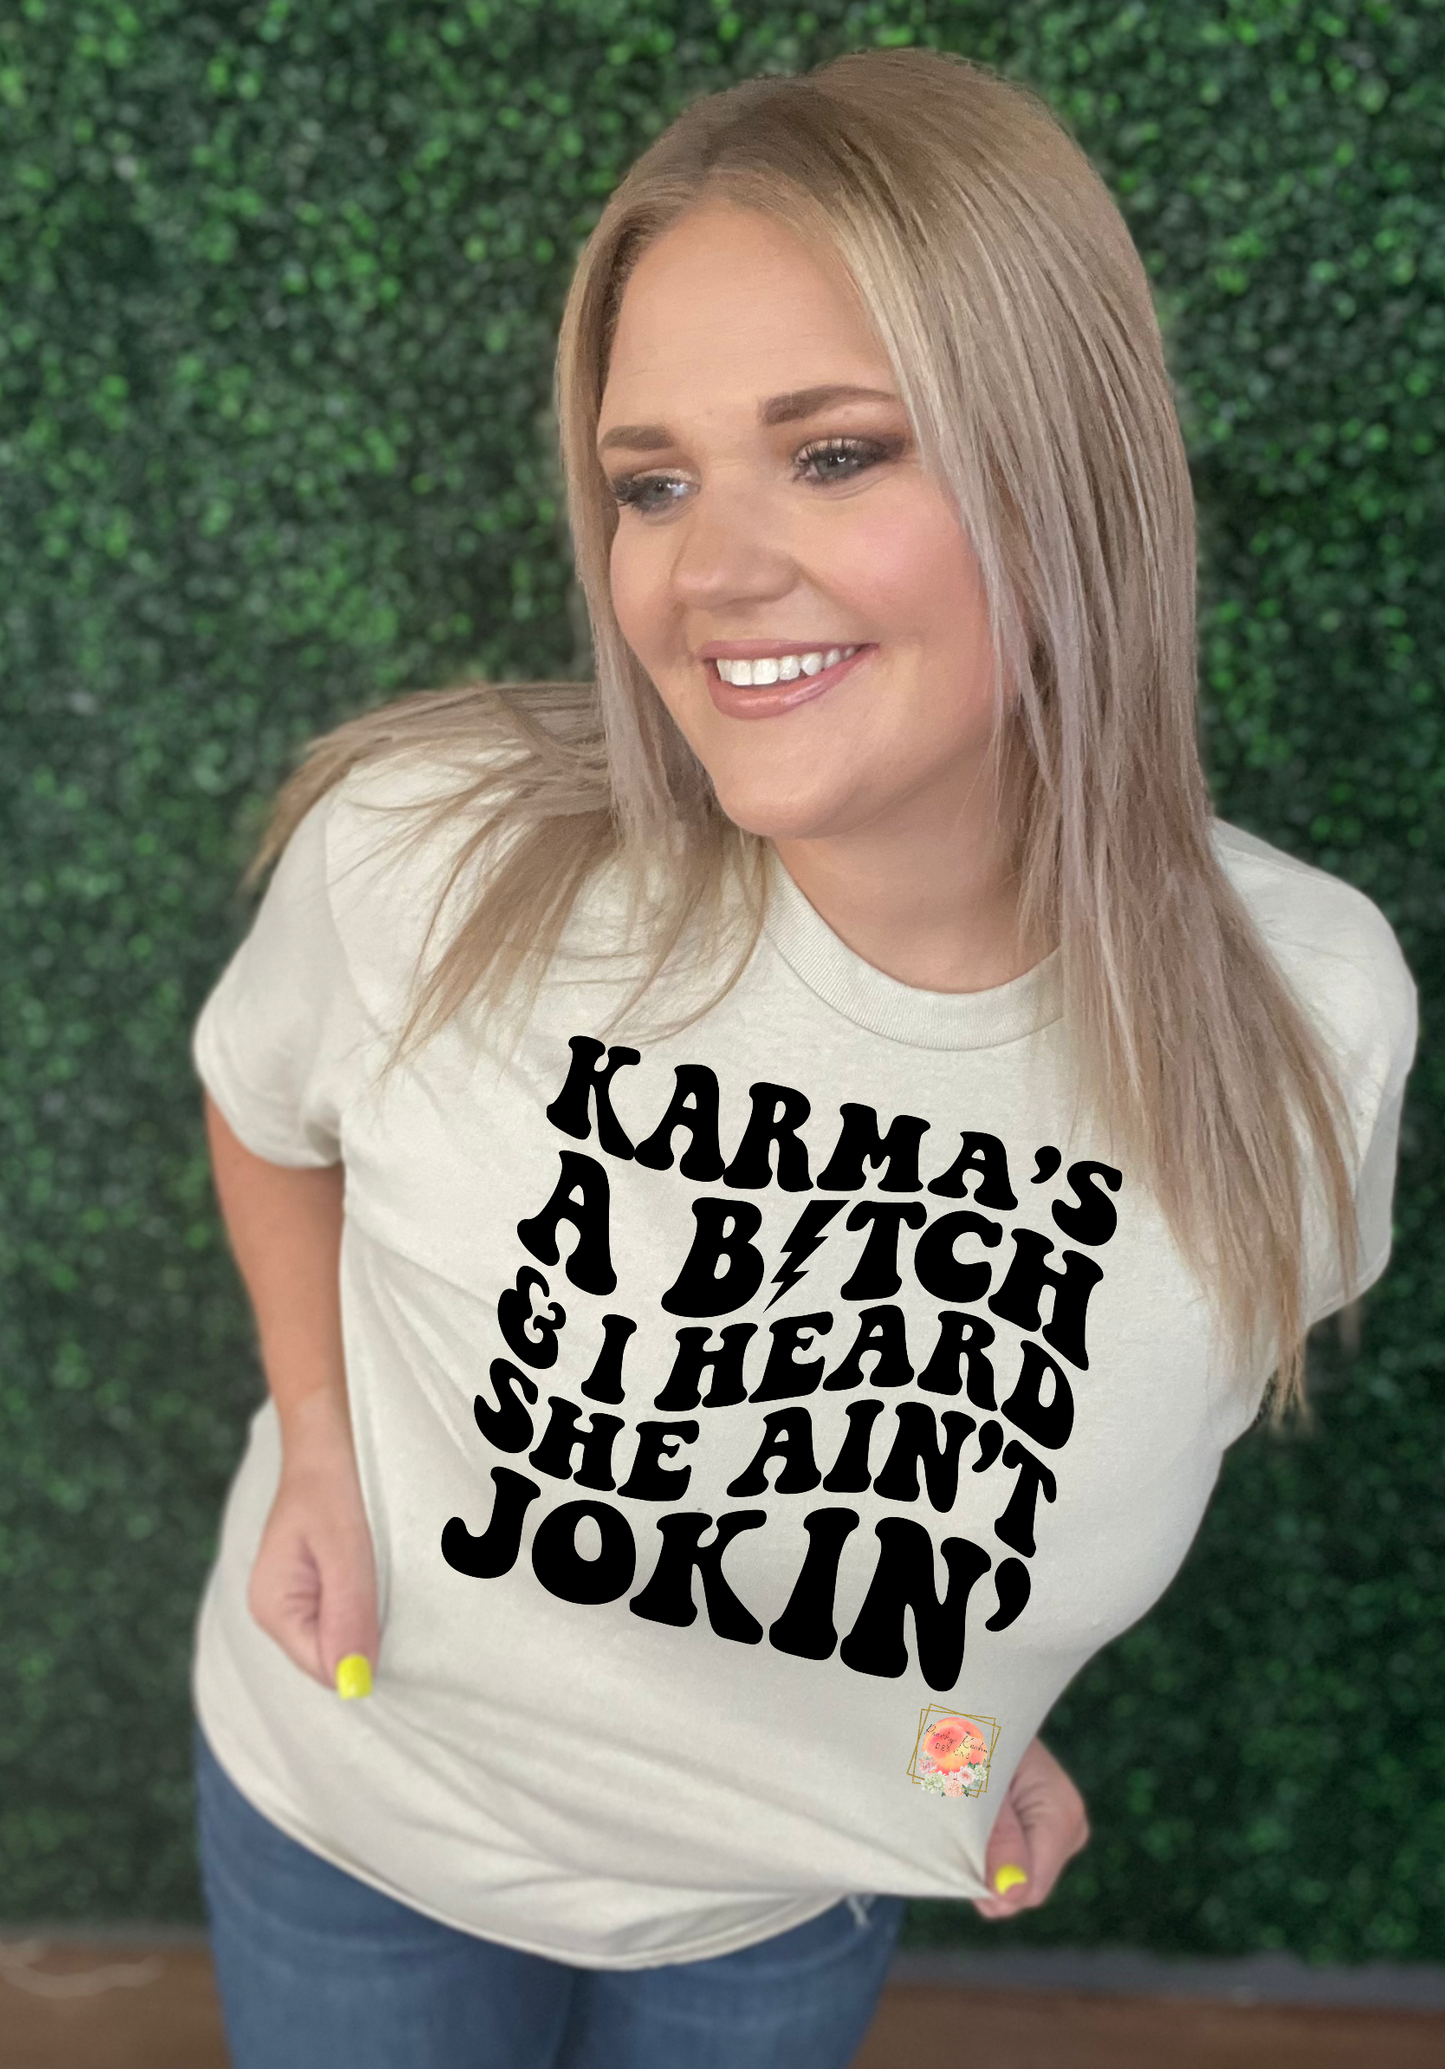 Karmas a bitch tee